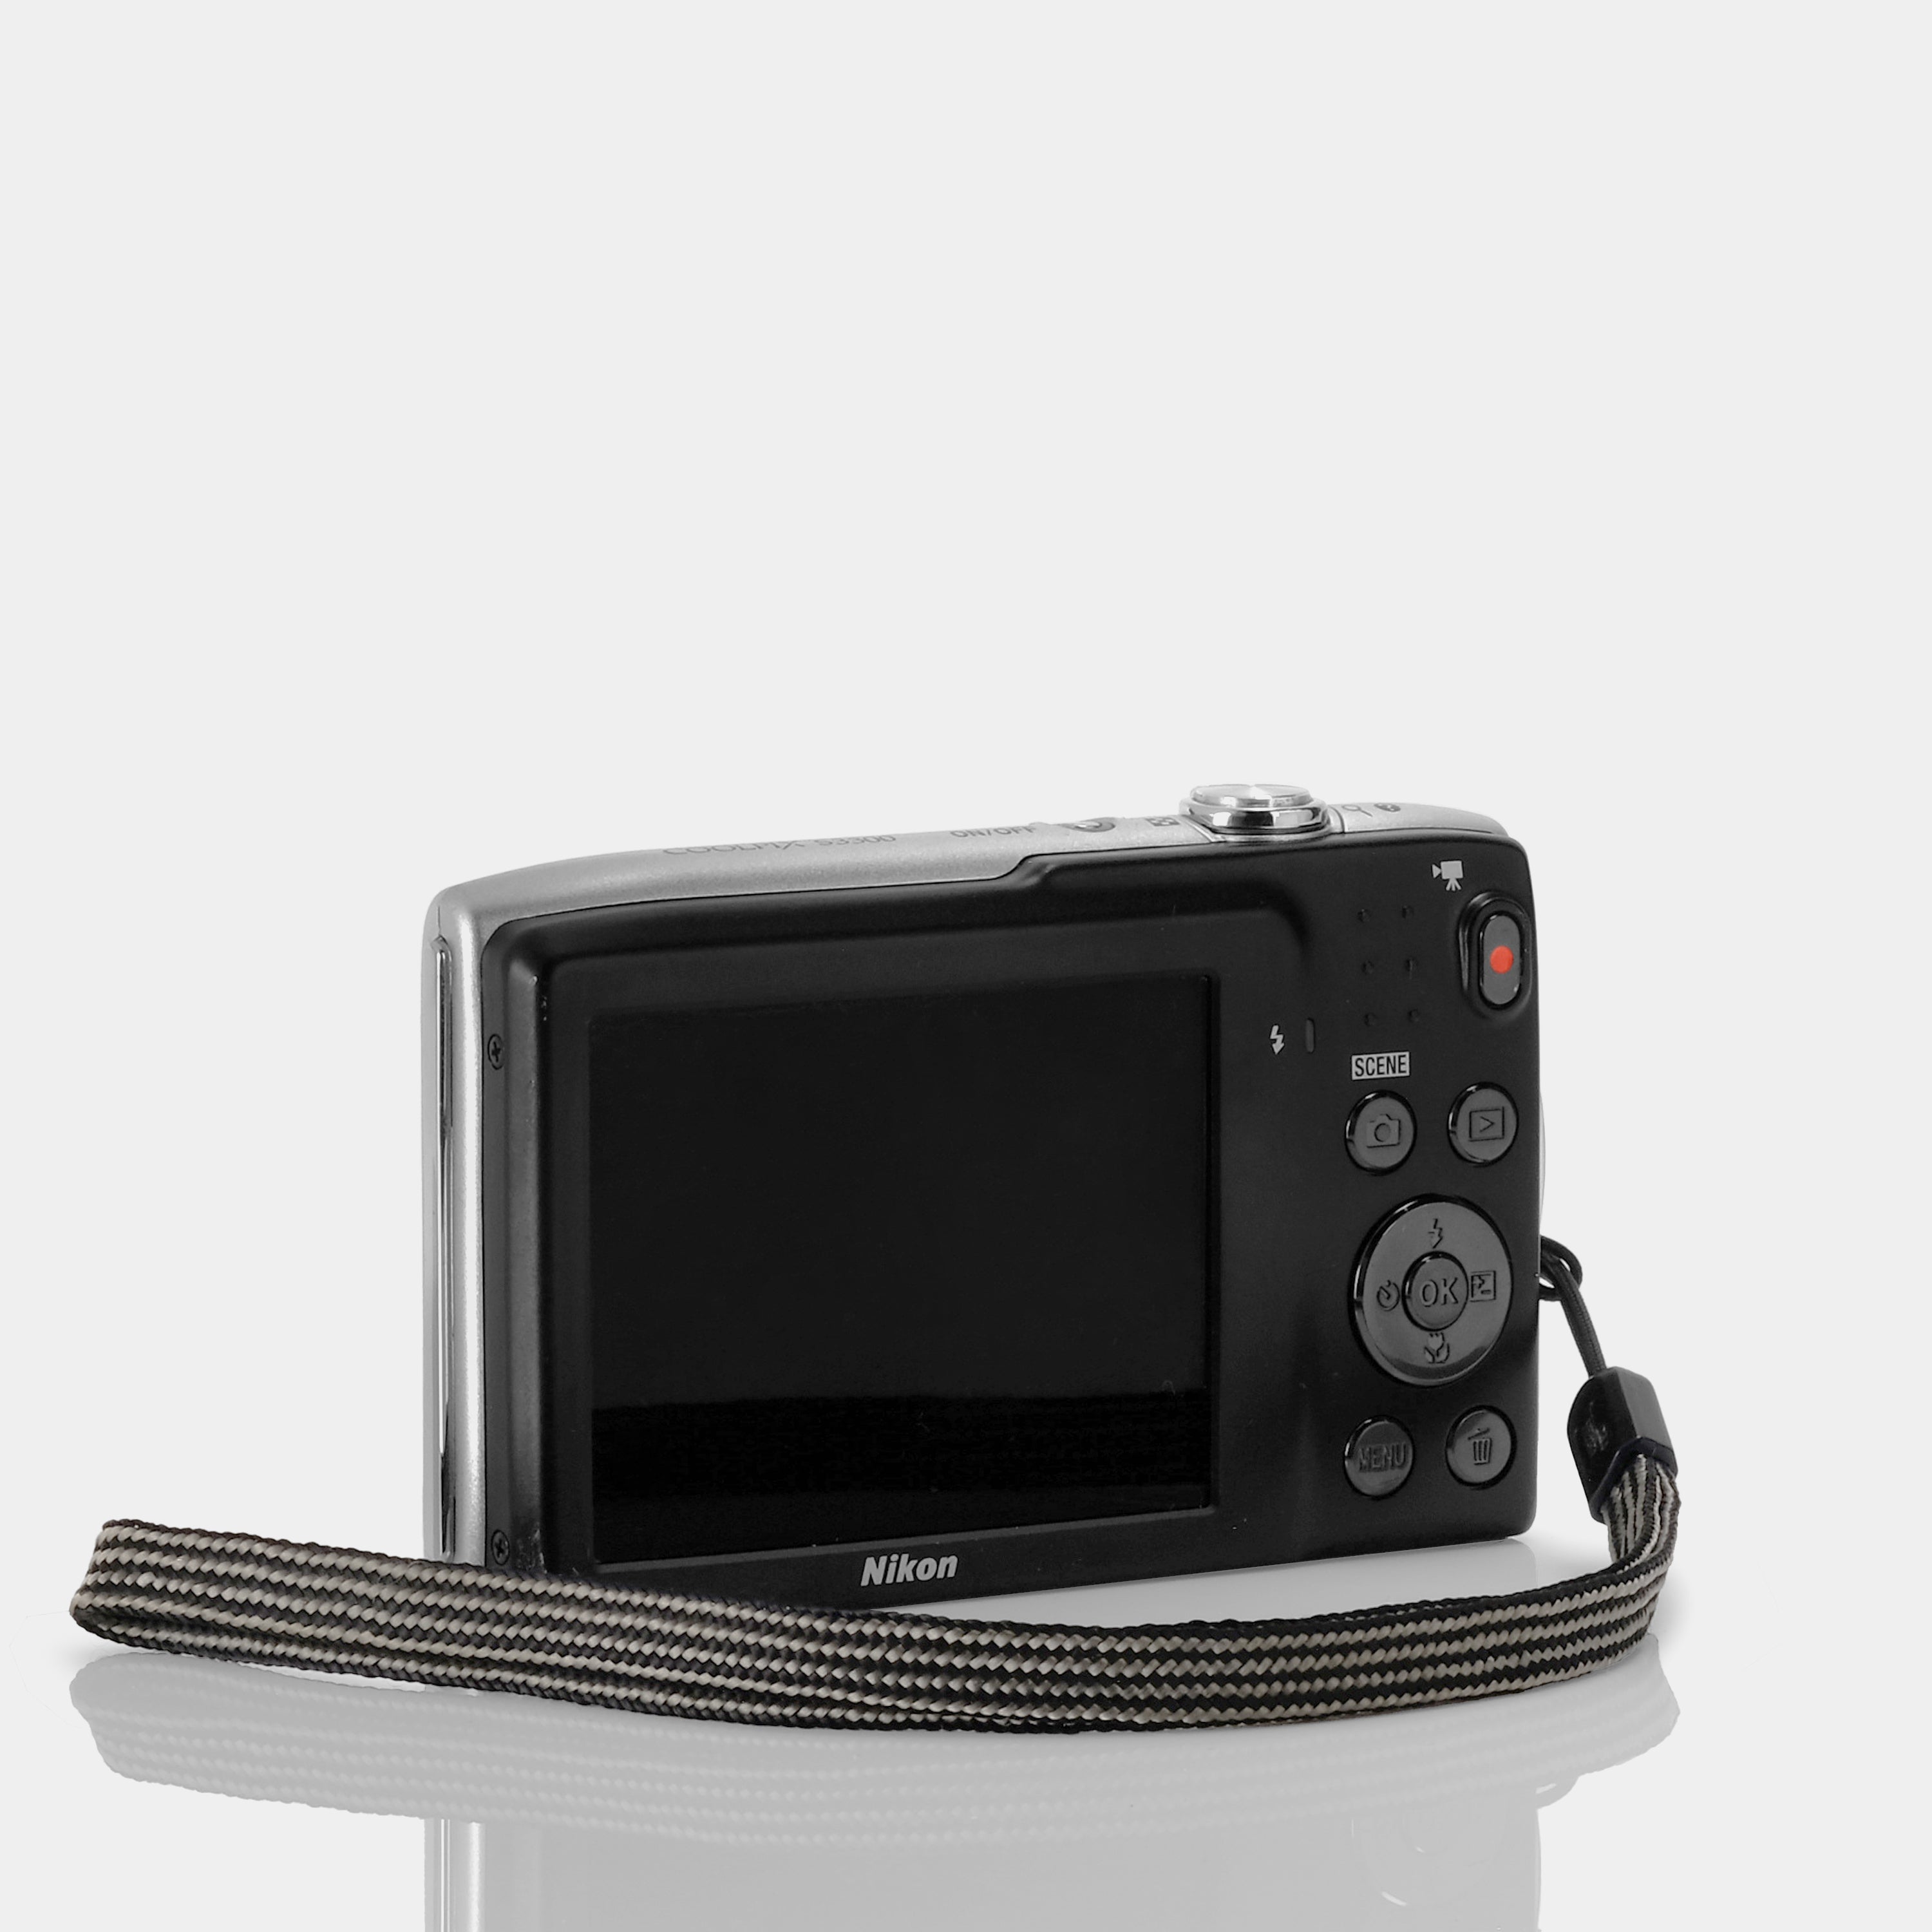 Nikon Coolpix S3300 Silver Point and Shoot Digital Camera